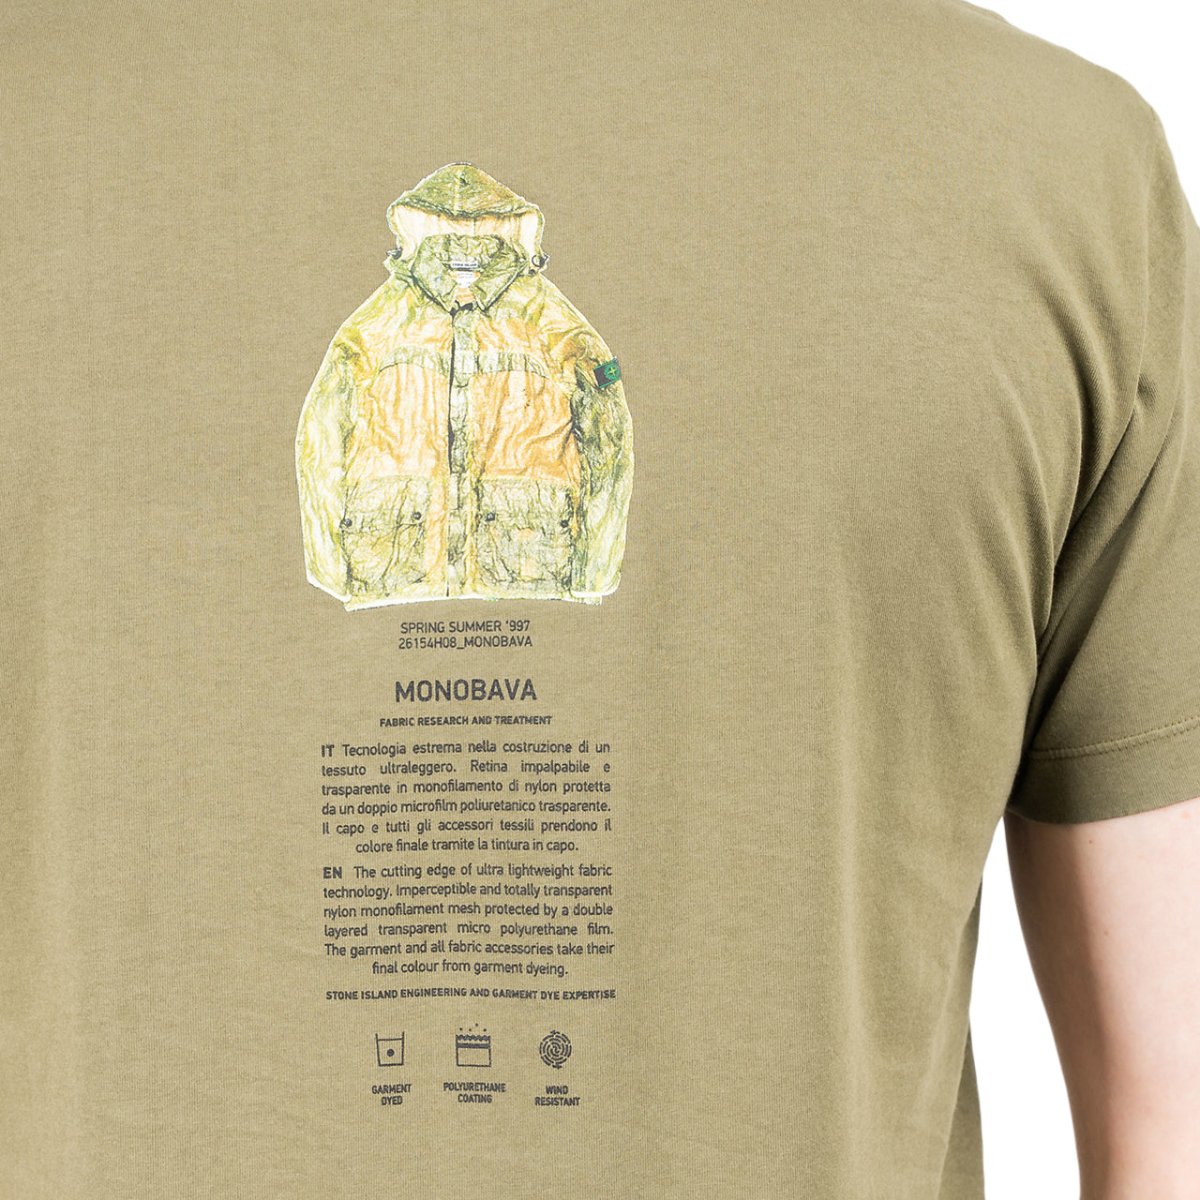 Stone Island Archivio T-Shirt (Olive)  - Allike Store